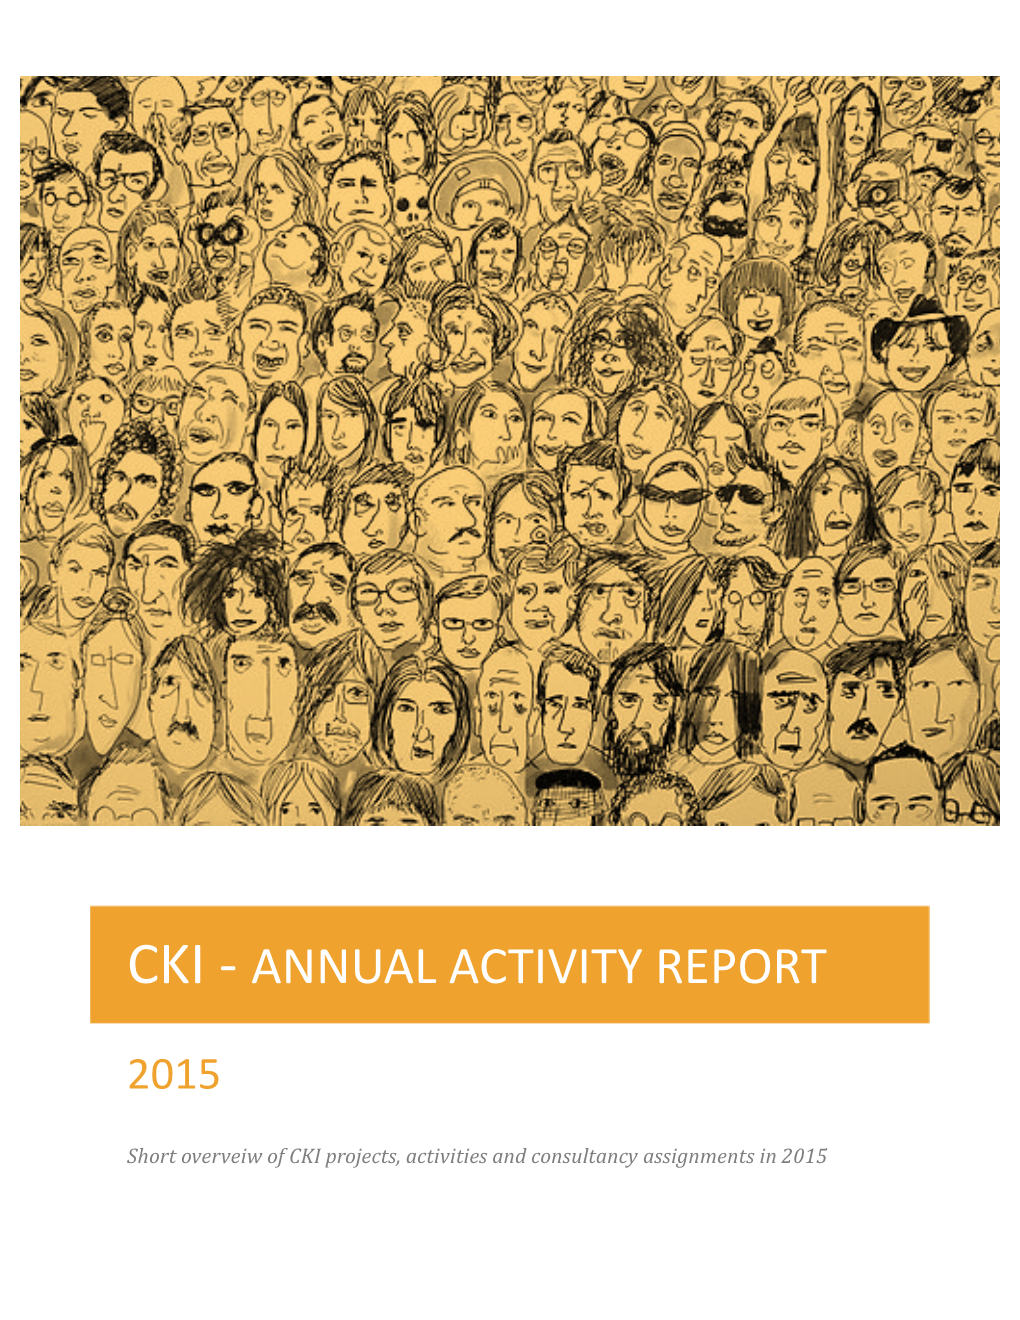 Cki - Annual Activity Report